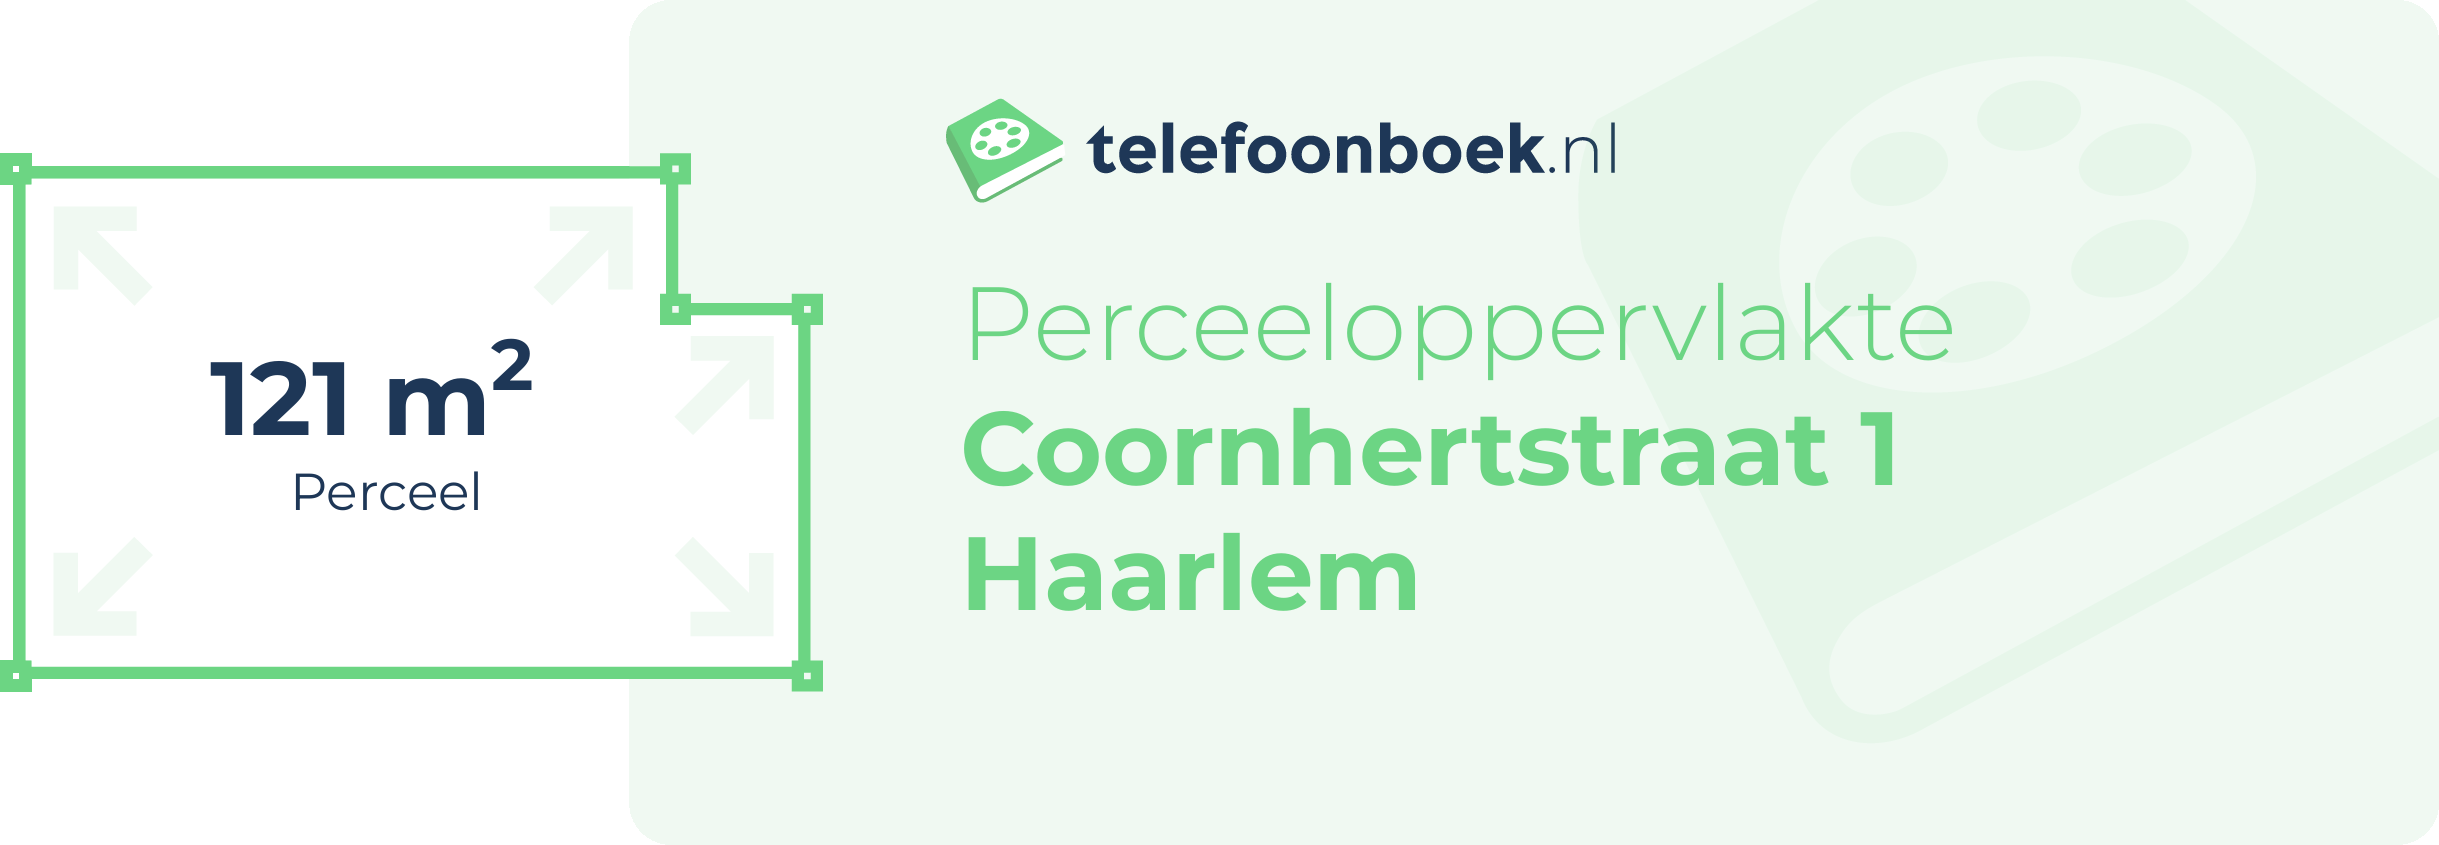 Perceeloppervlakte Coornhertstraat 1 Haarlem